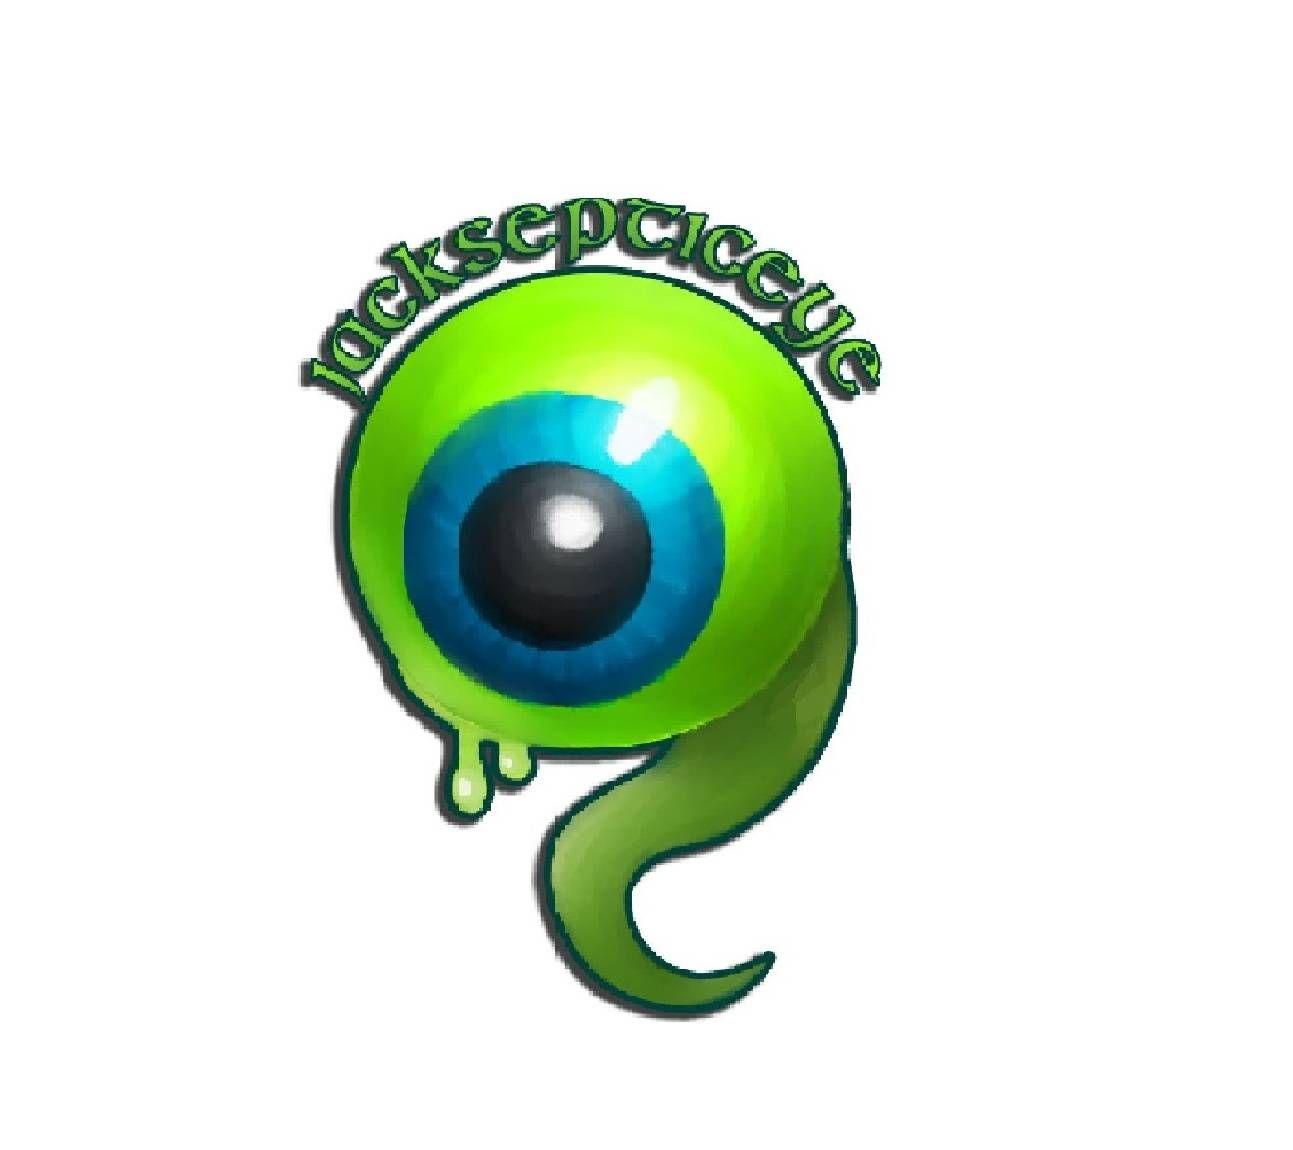 Jacksepticeye Logo - jacksepticeye logo 1 Wallpaper by Jenilee911 - a8 - Free on ZEDGE™